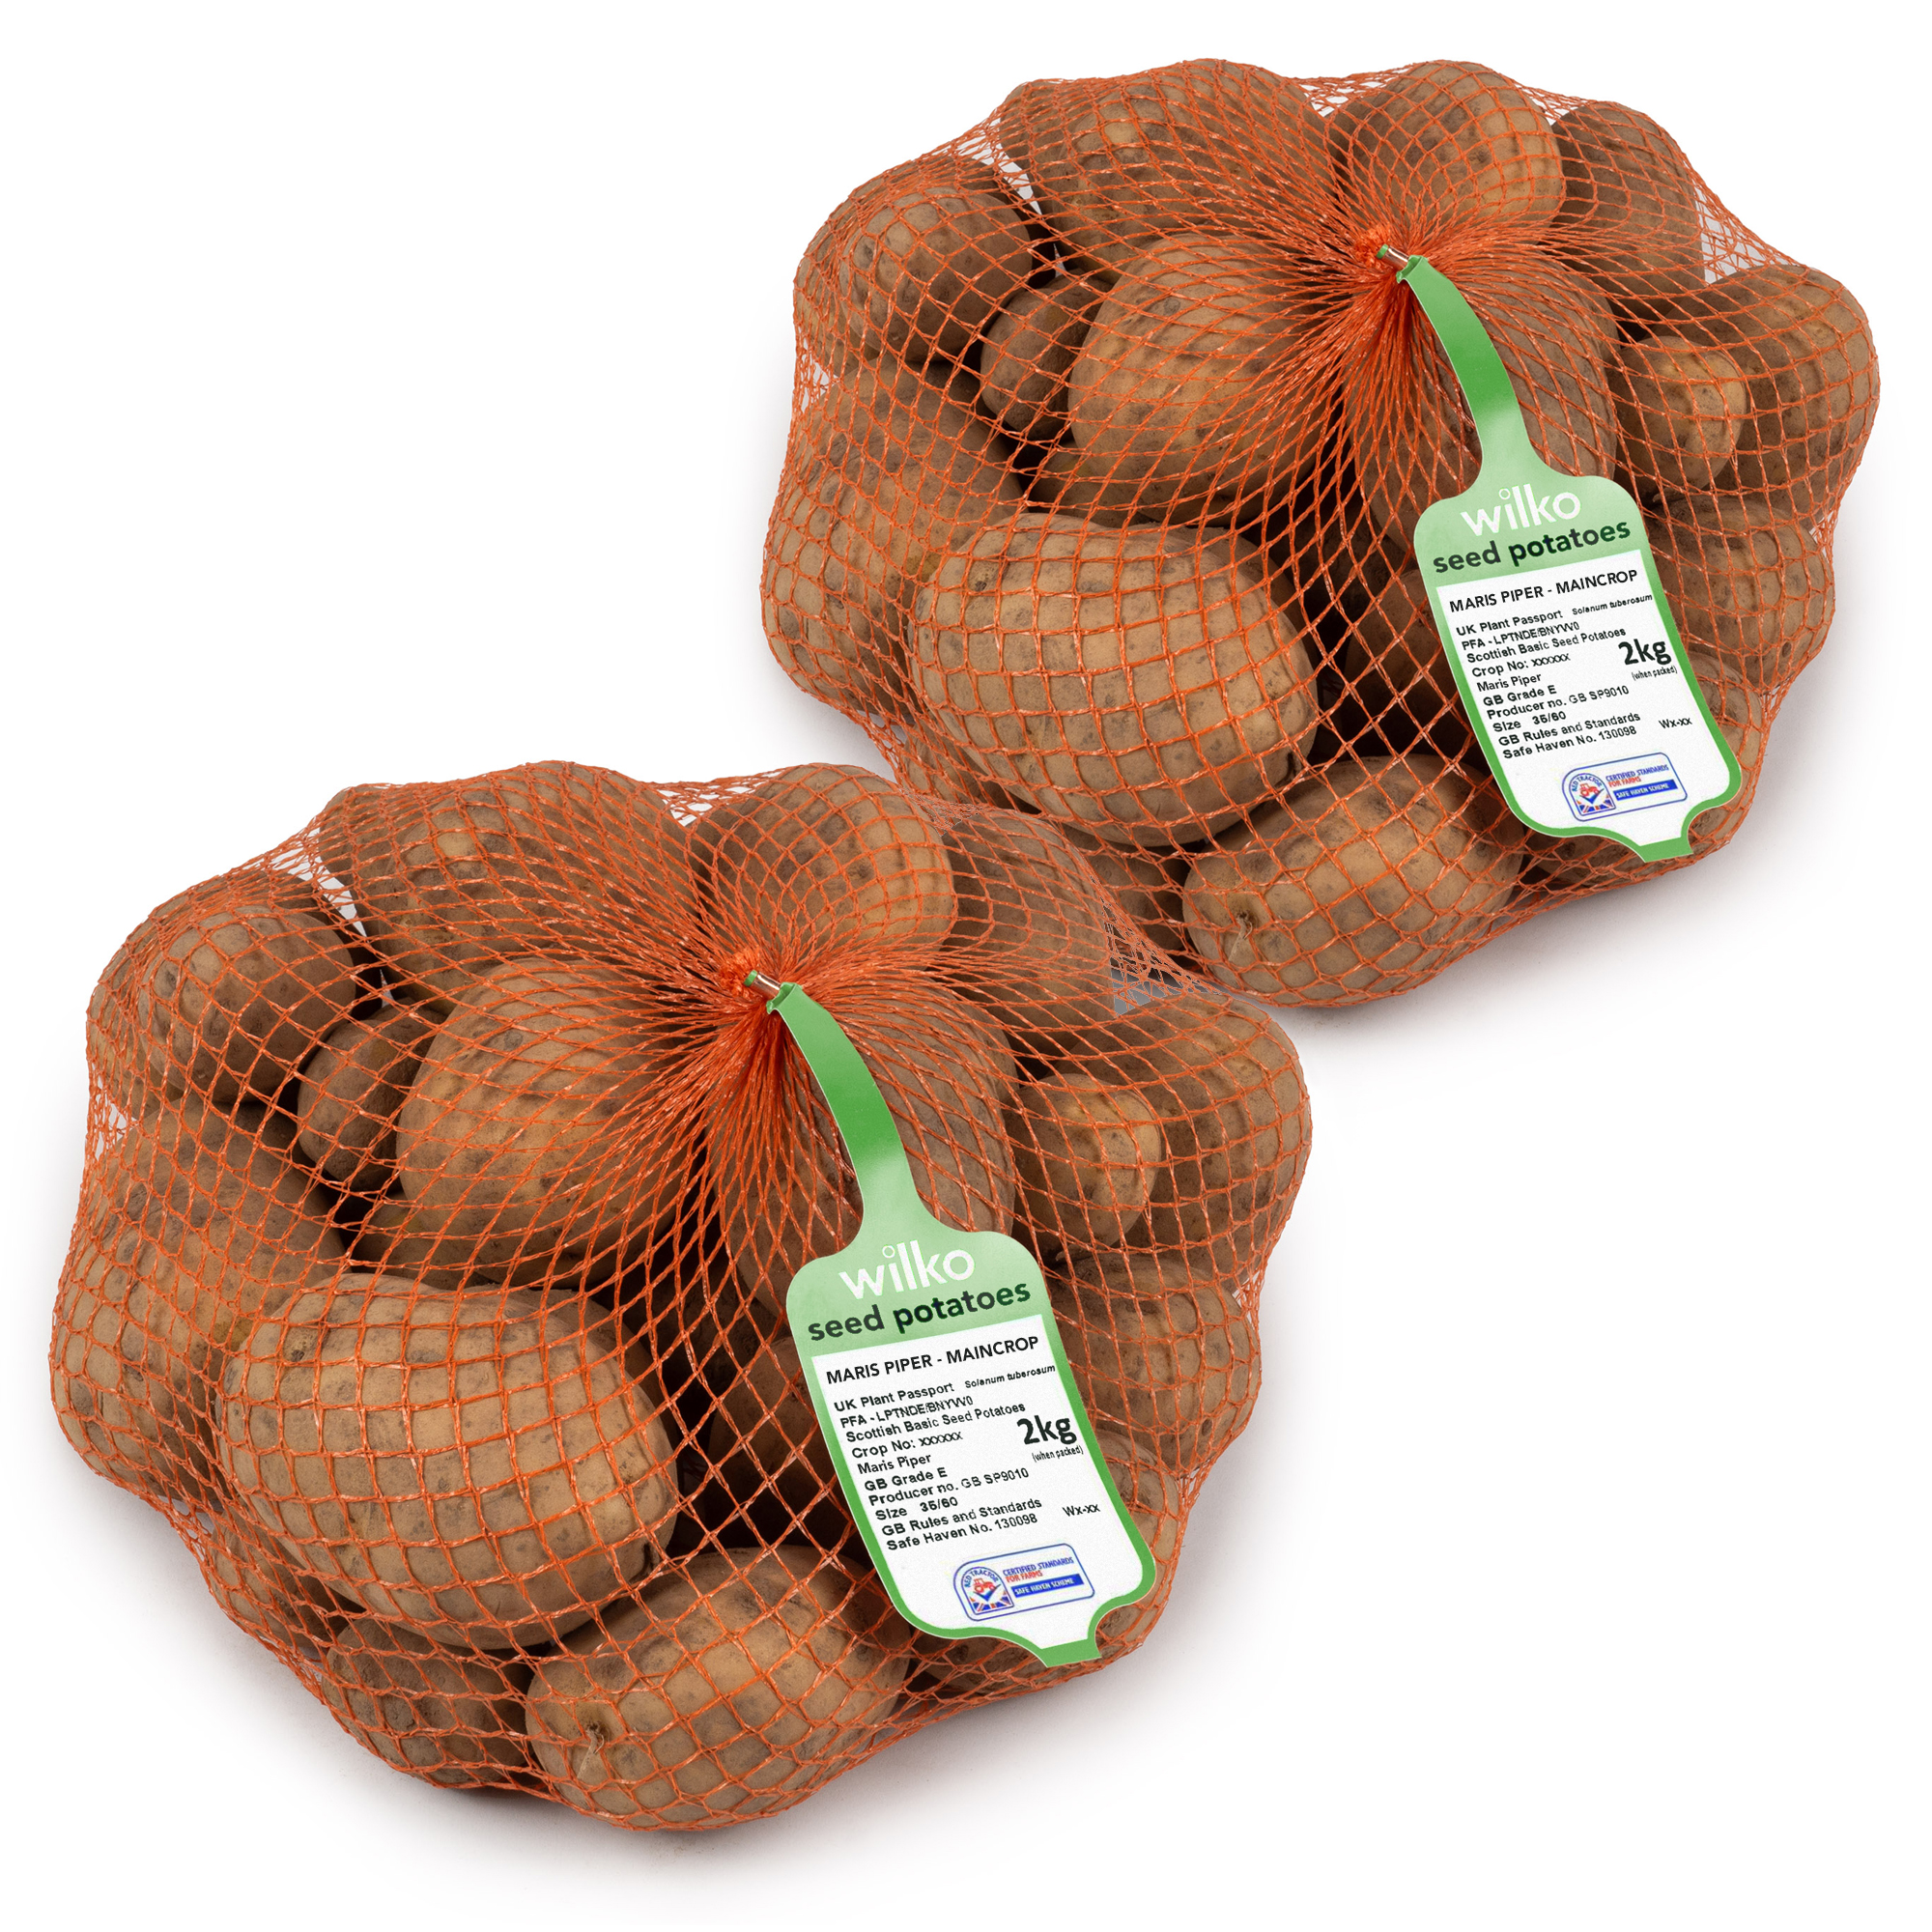 Wilko Maris Piper Main Crop Seed Potatoes 4kg Image 2